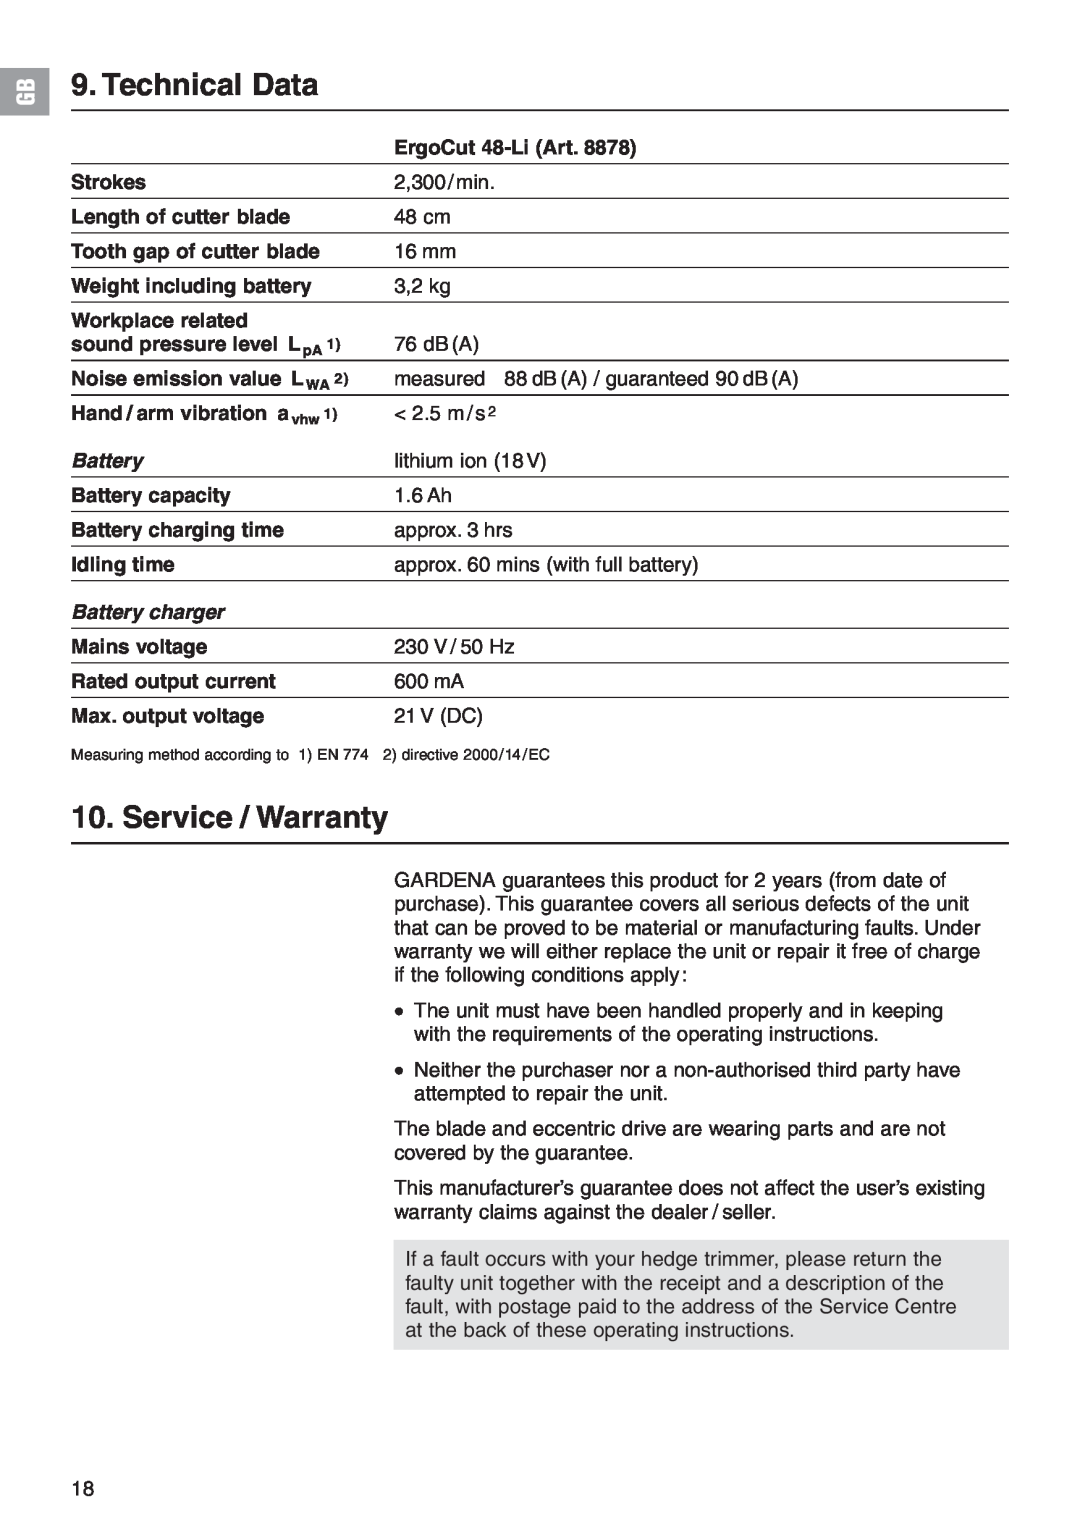 Gardena 48-Li Art. 8878 manual Technical Data, Service / Warranty 